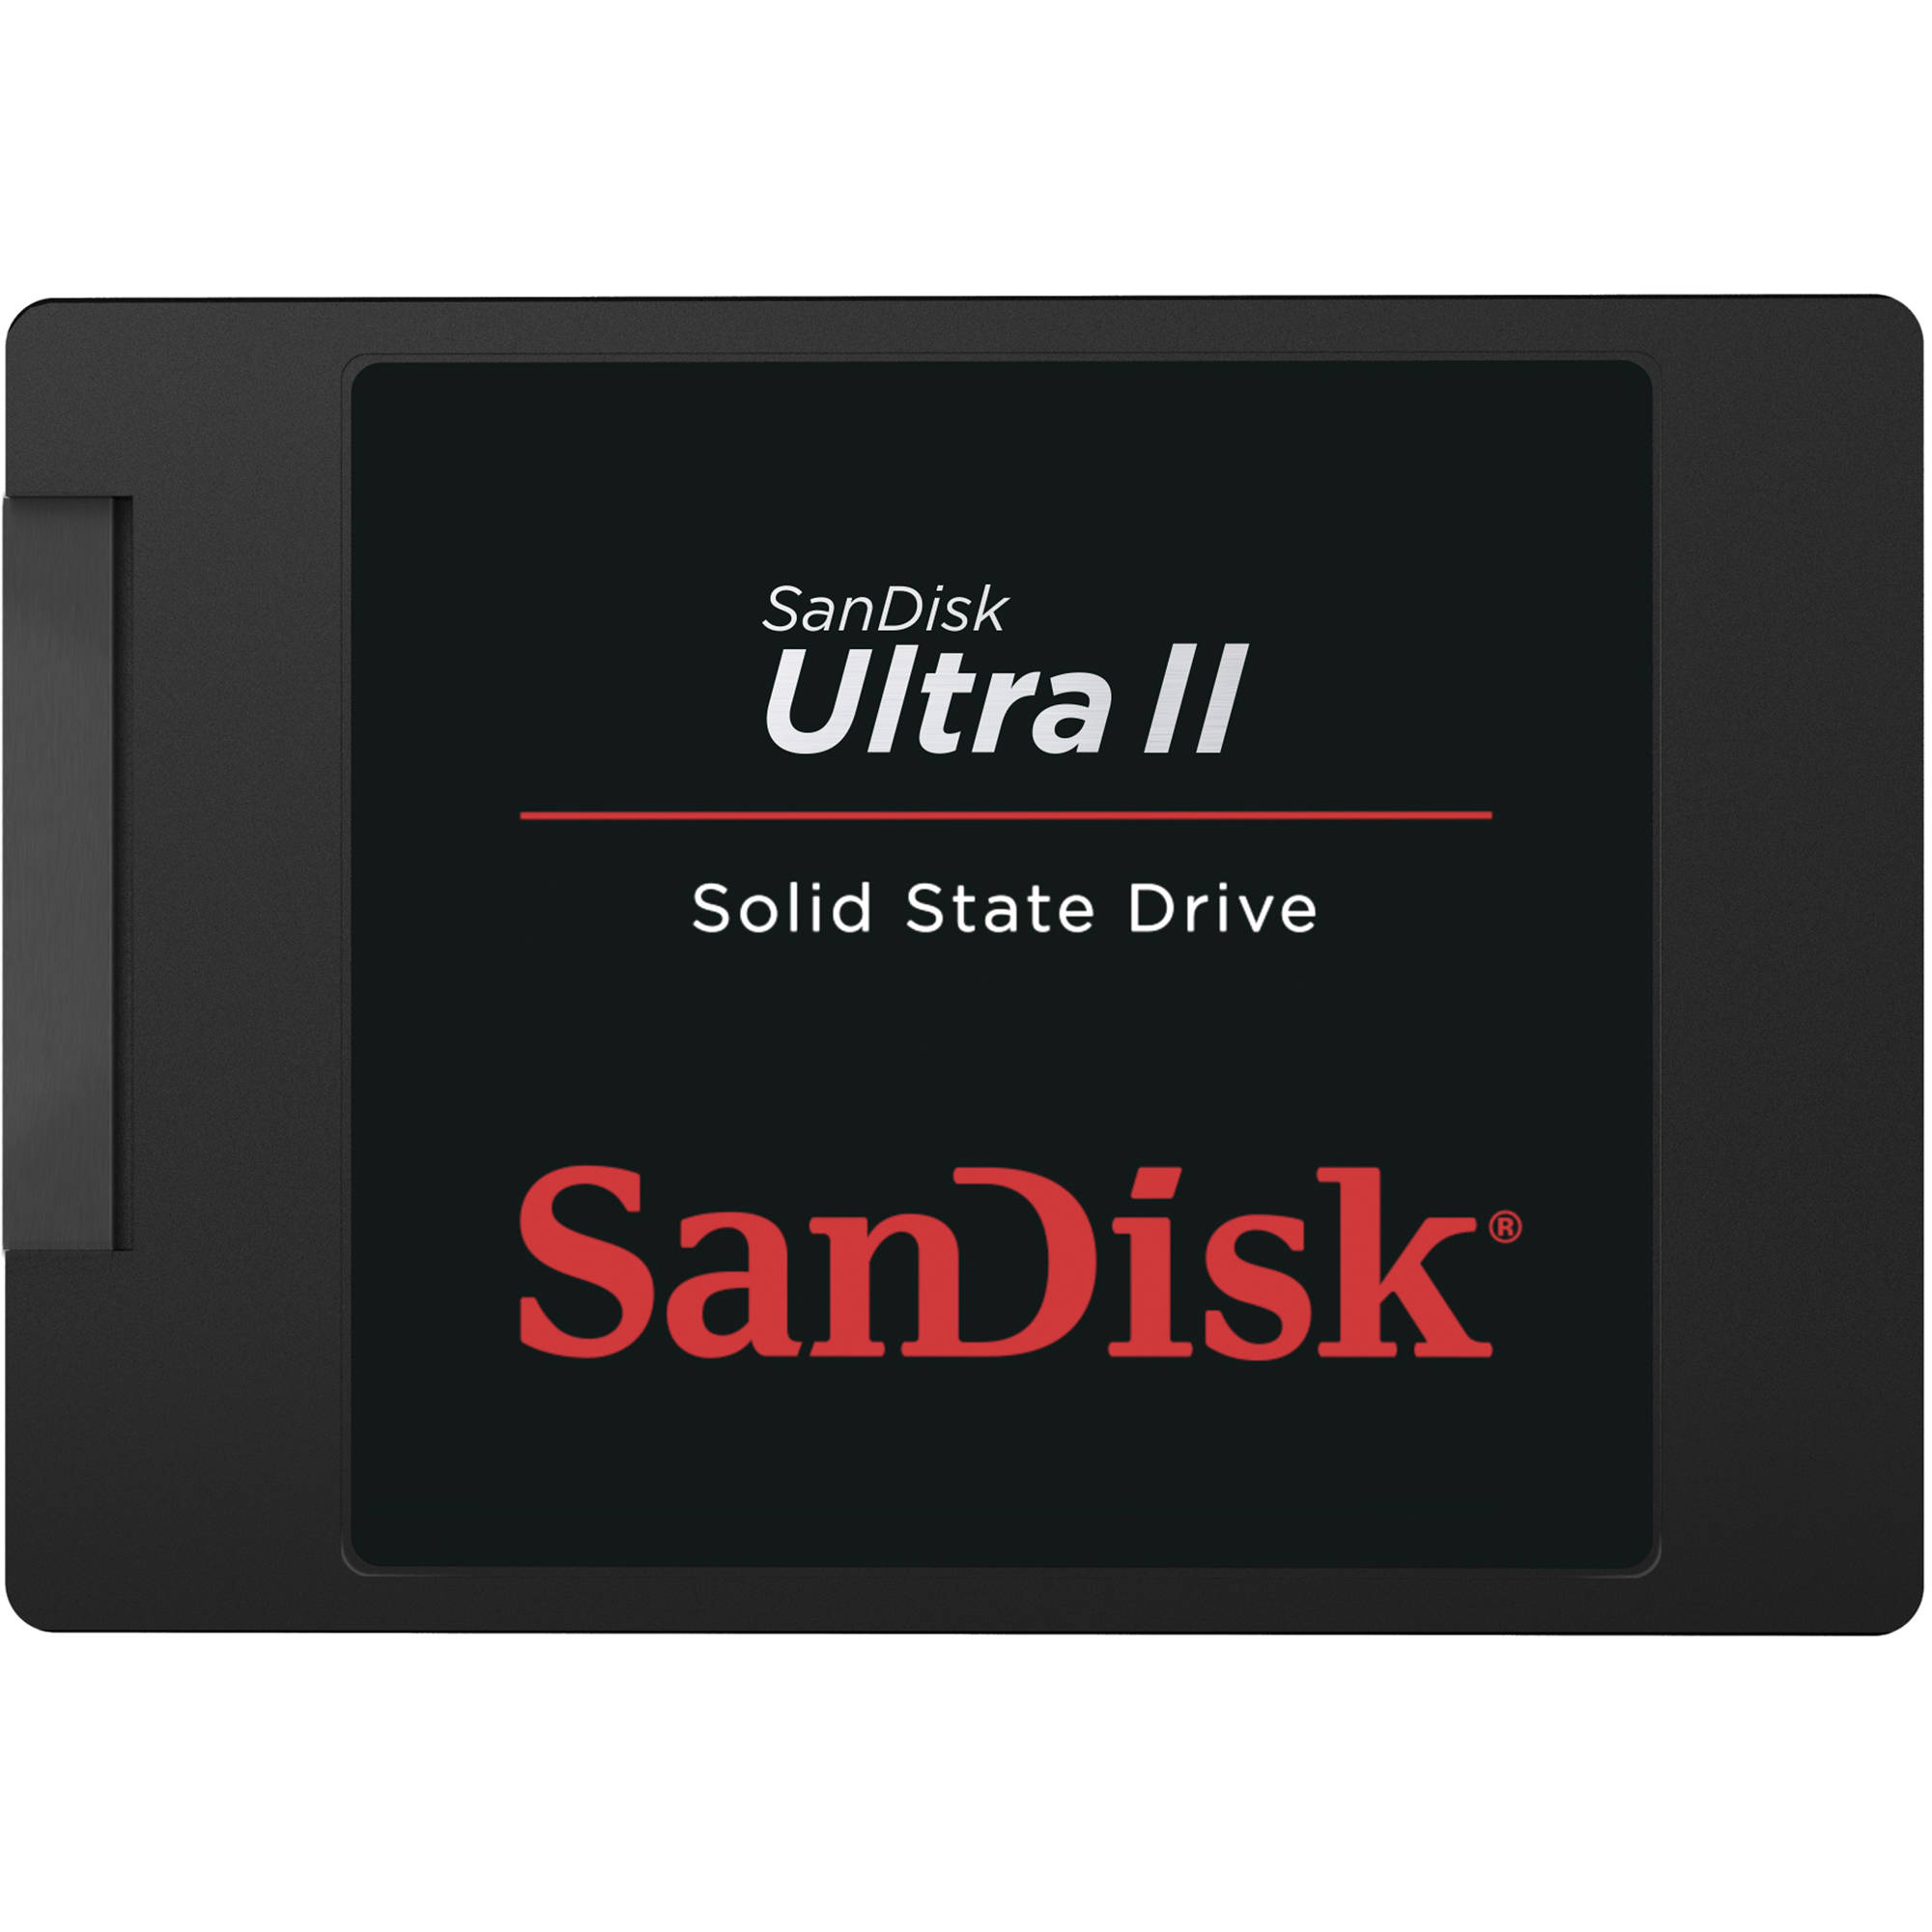  SSD Sandisk Ultra II 120GB SATA3, 550/500 MBs 